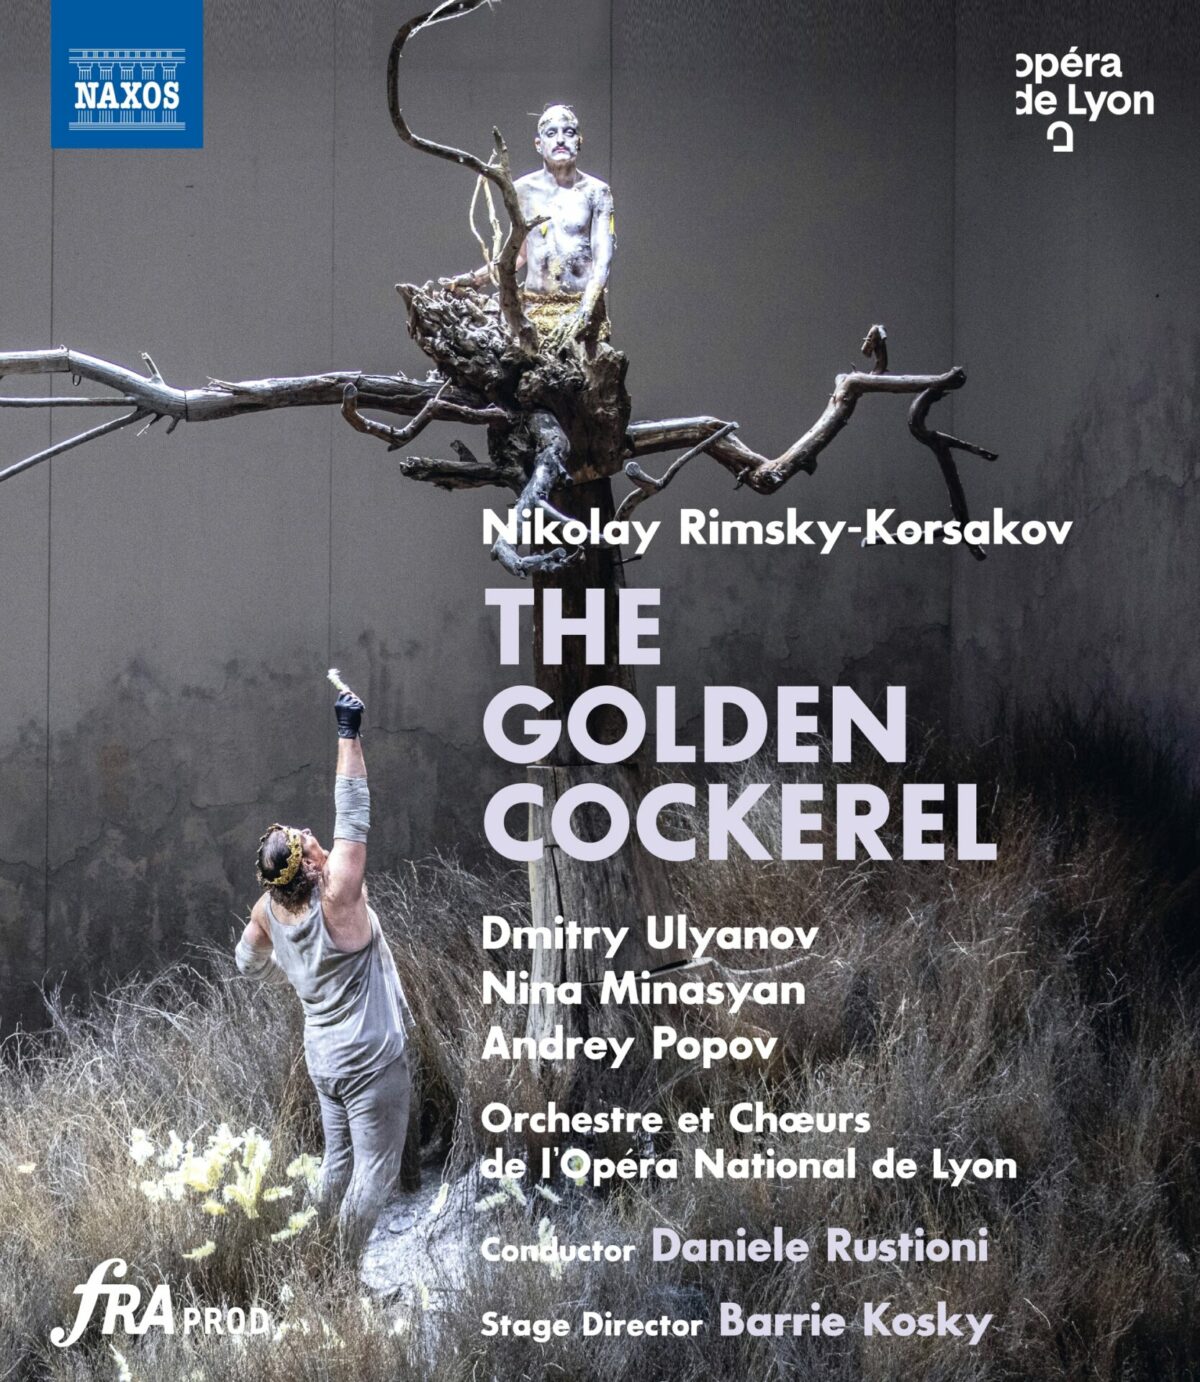 Blu-ray-Rezension: Nikolay Rimsky-Korsakov, The Golden Cockerel  klassik-begeistert.de